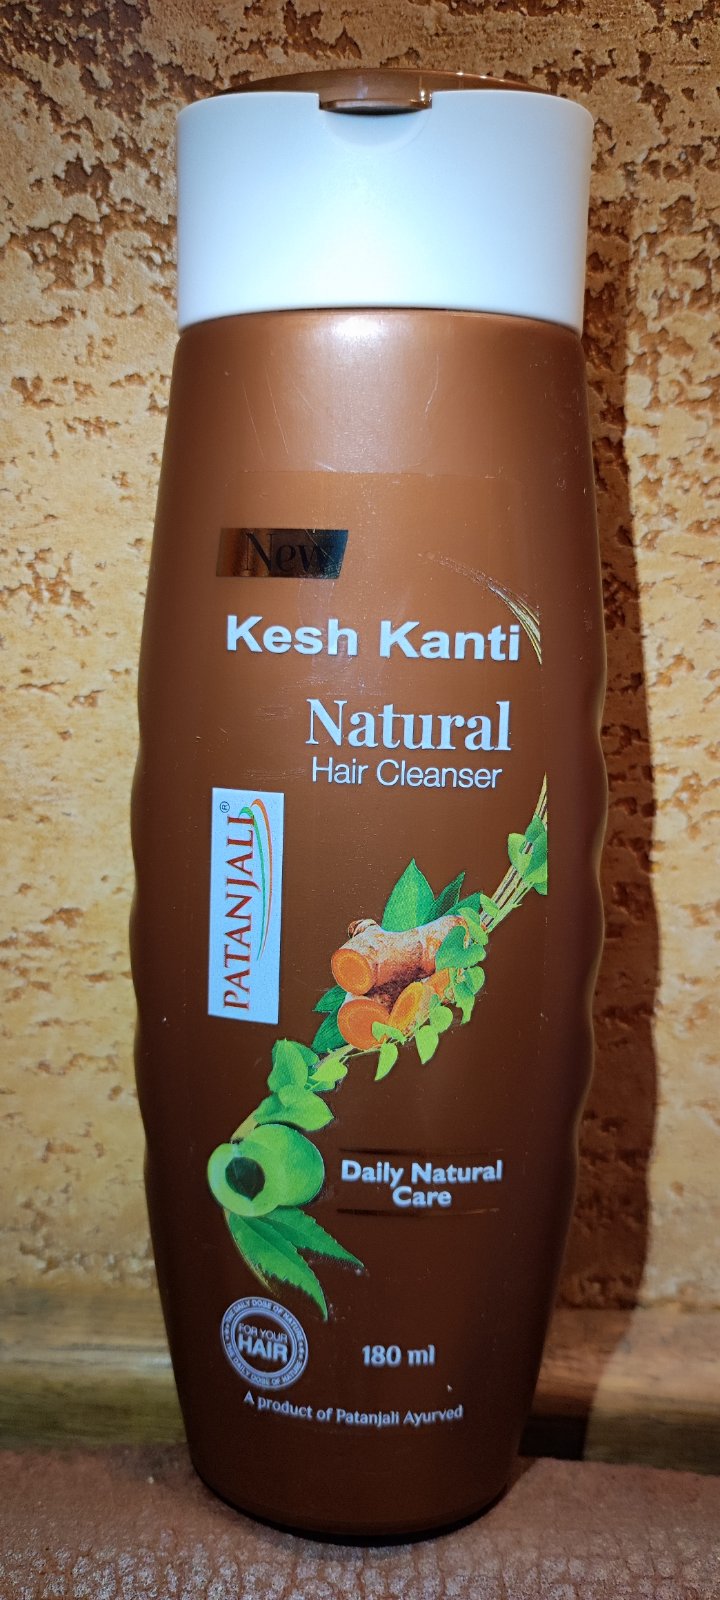 Шампунь Патанджали Натурал для всех типов волос Кеш канти Natural Hair Cleanser Патанджали аюрведа Kesh Kanti Patanjali 180 мл